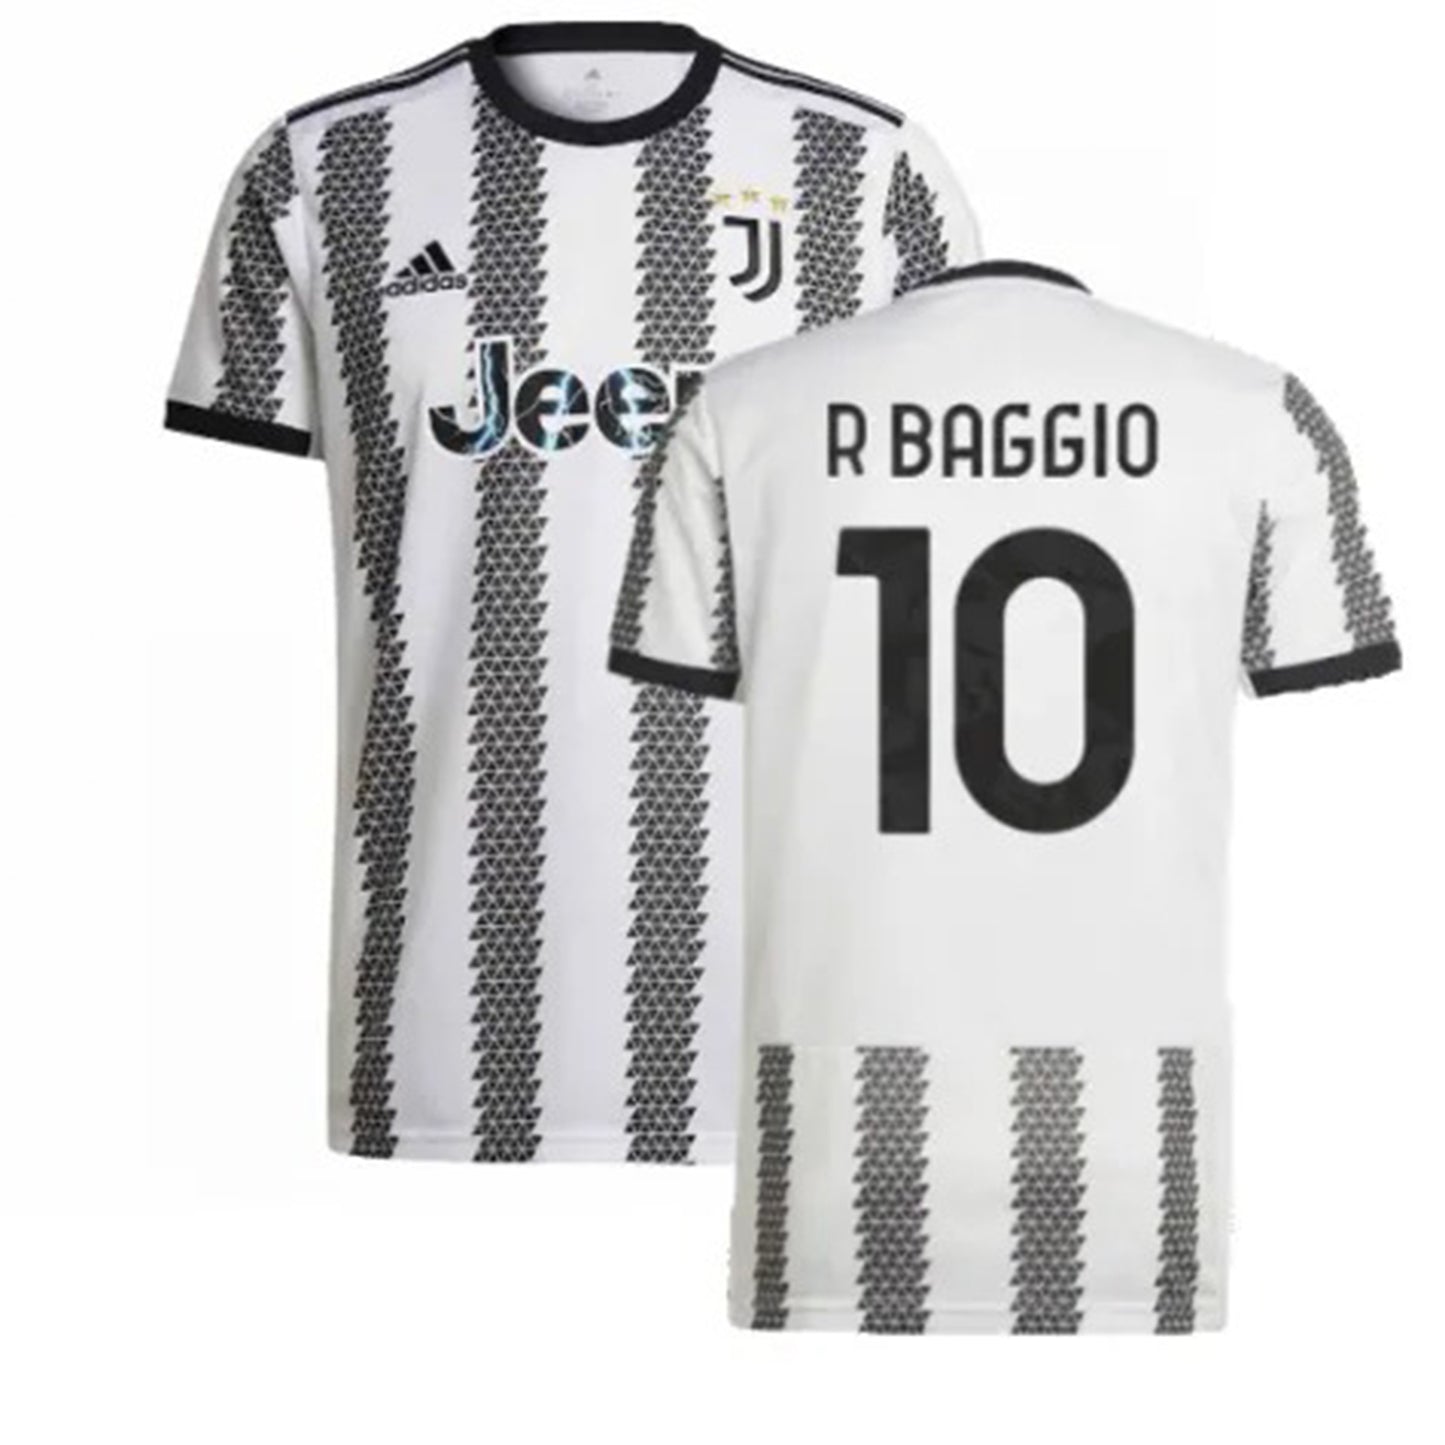 Roberto Baggio Juventus 10 Jersey